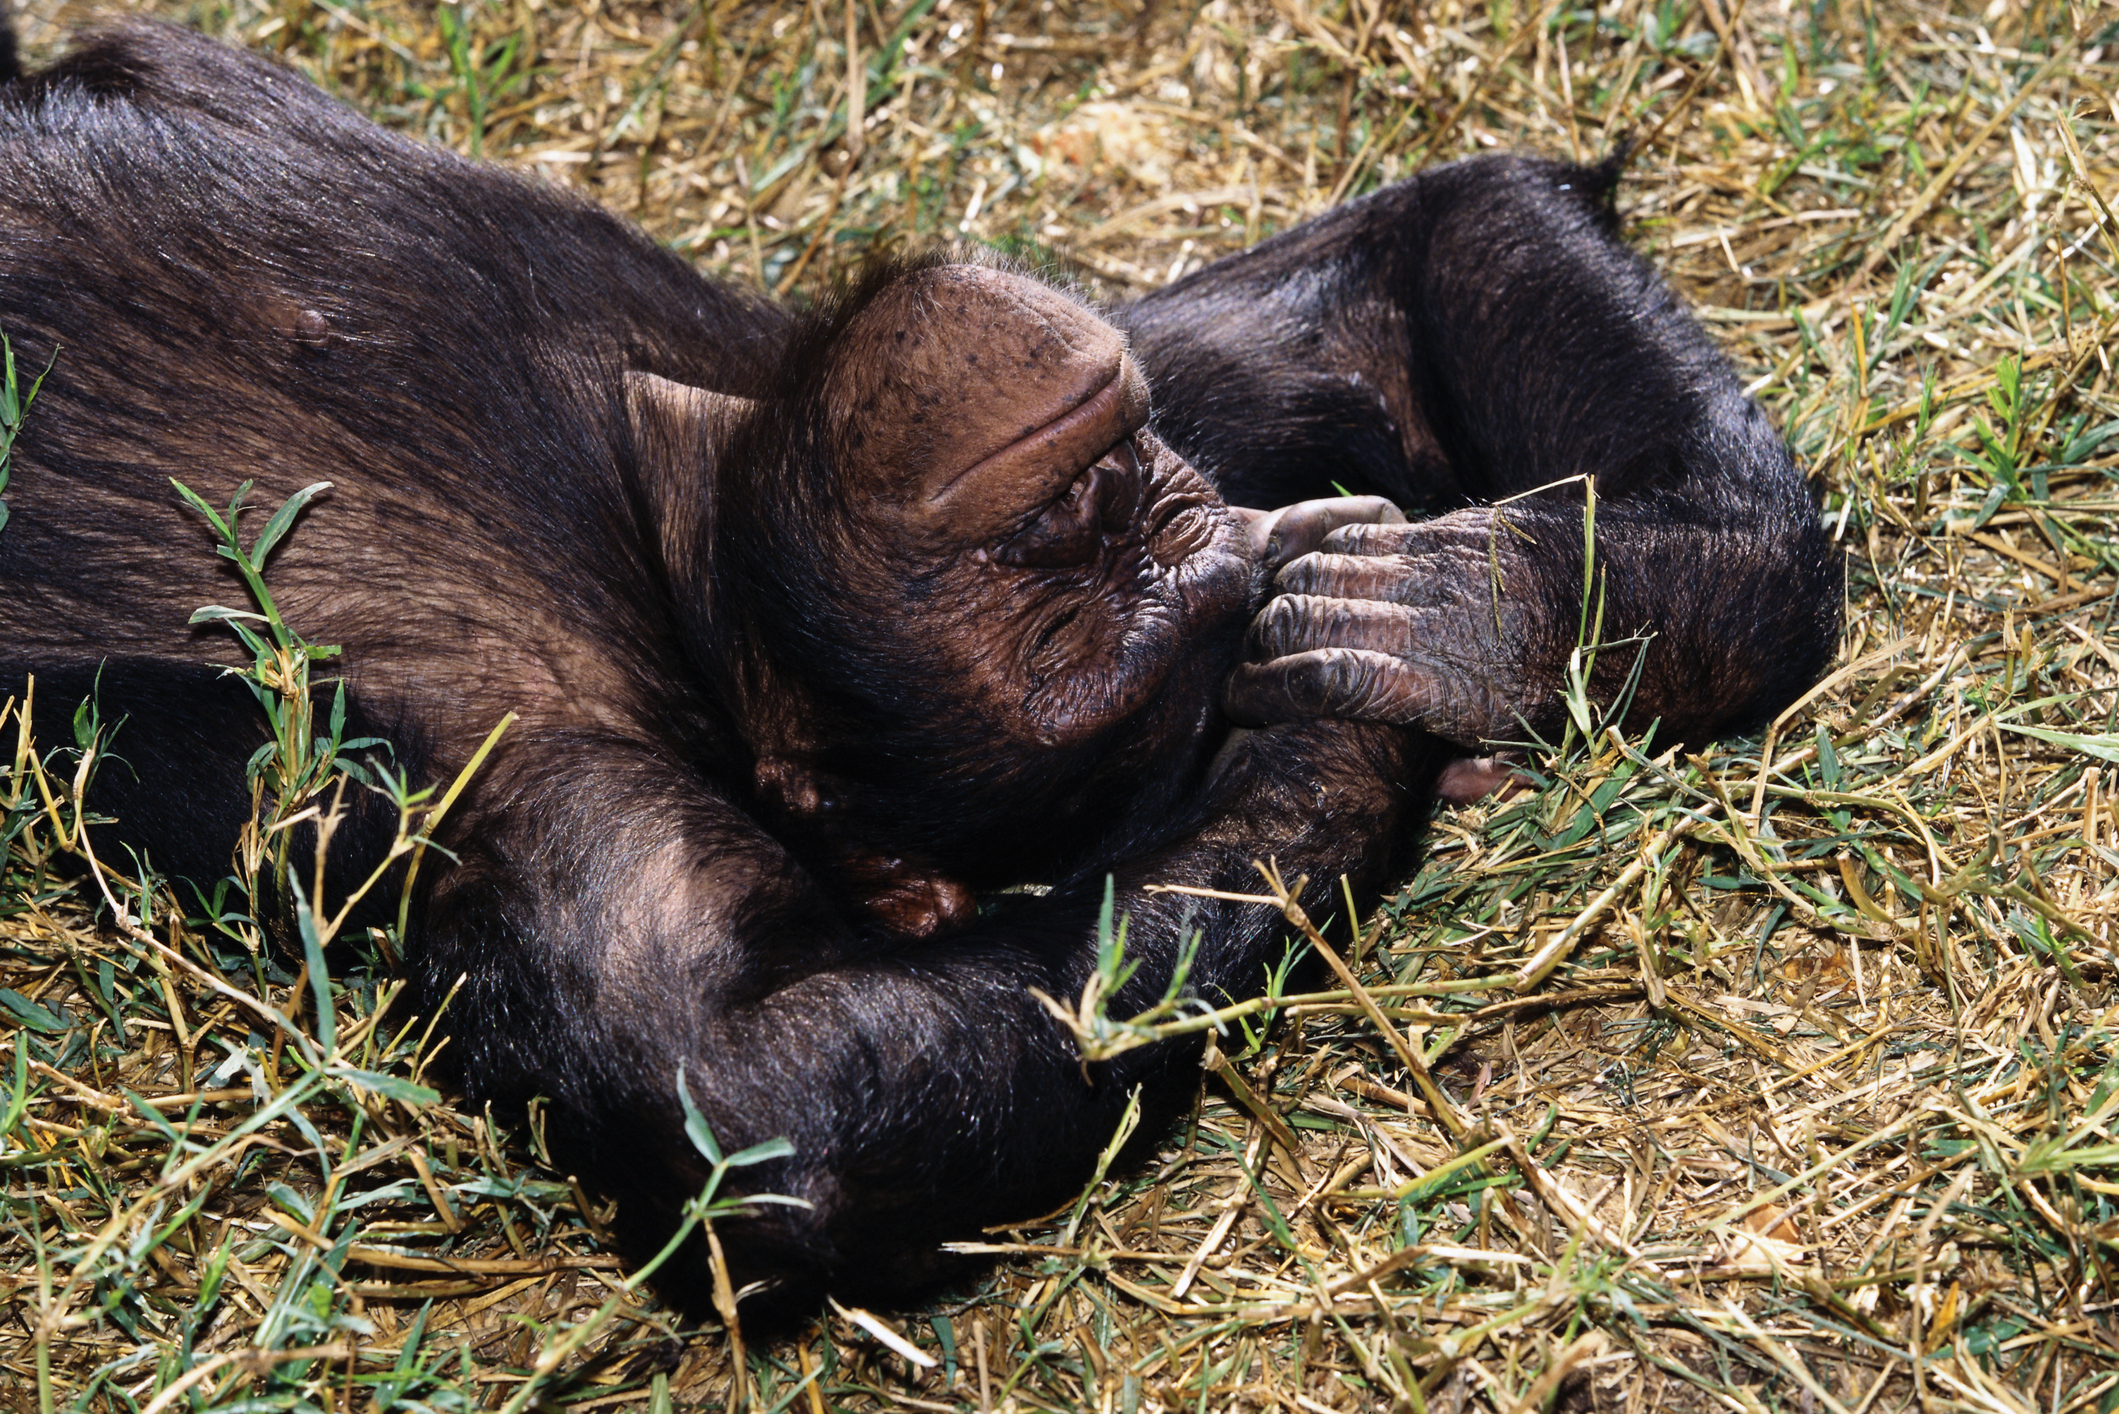 A chimpanzee sleeping at the Chimfunshi Chimpanzee Orphanage.